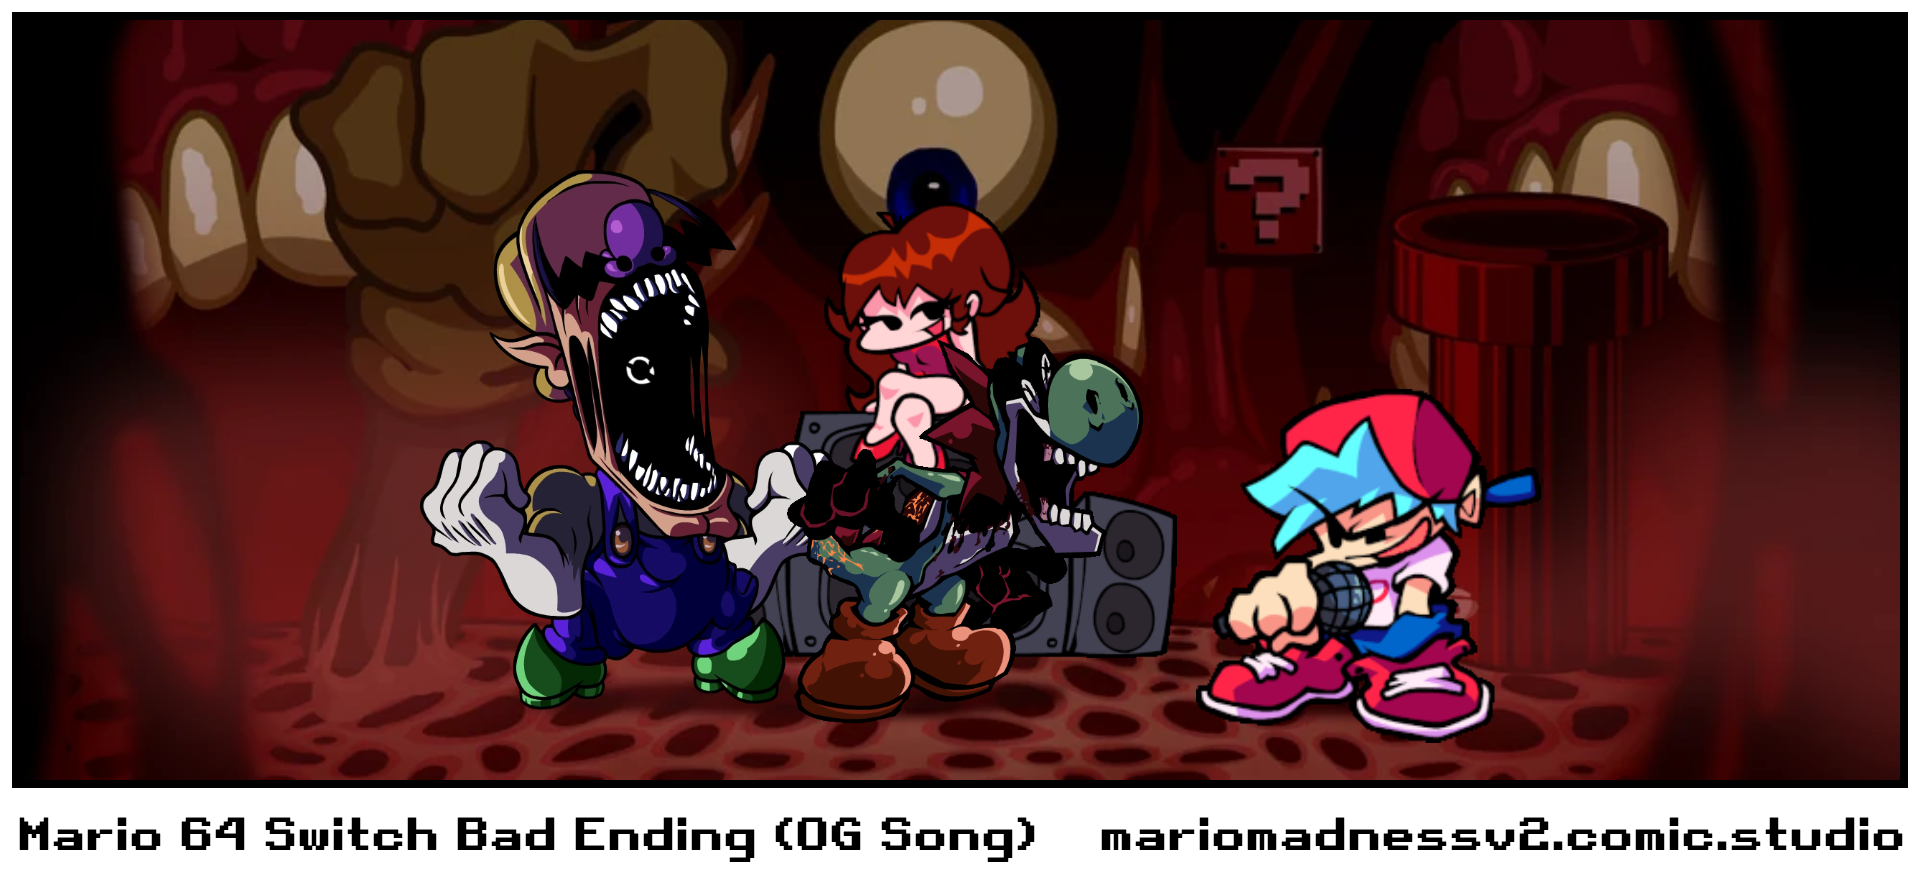 Mario 64 Switch Bad Ending (OG Song)